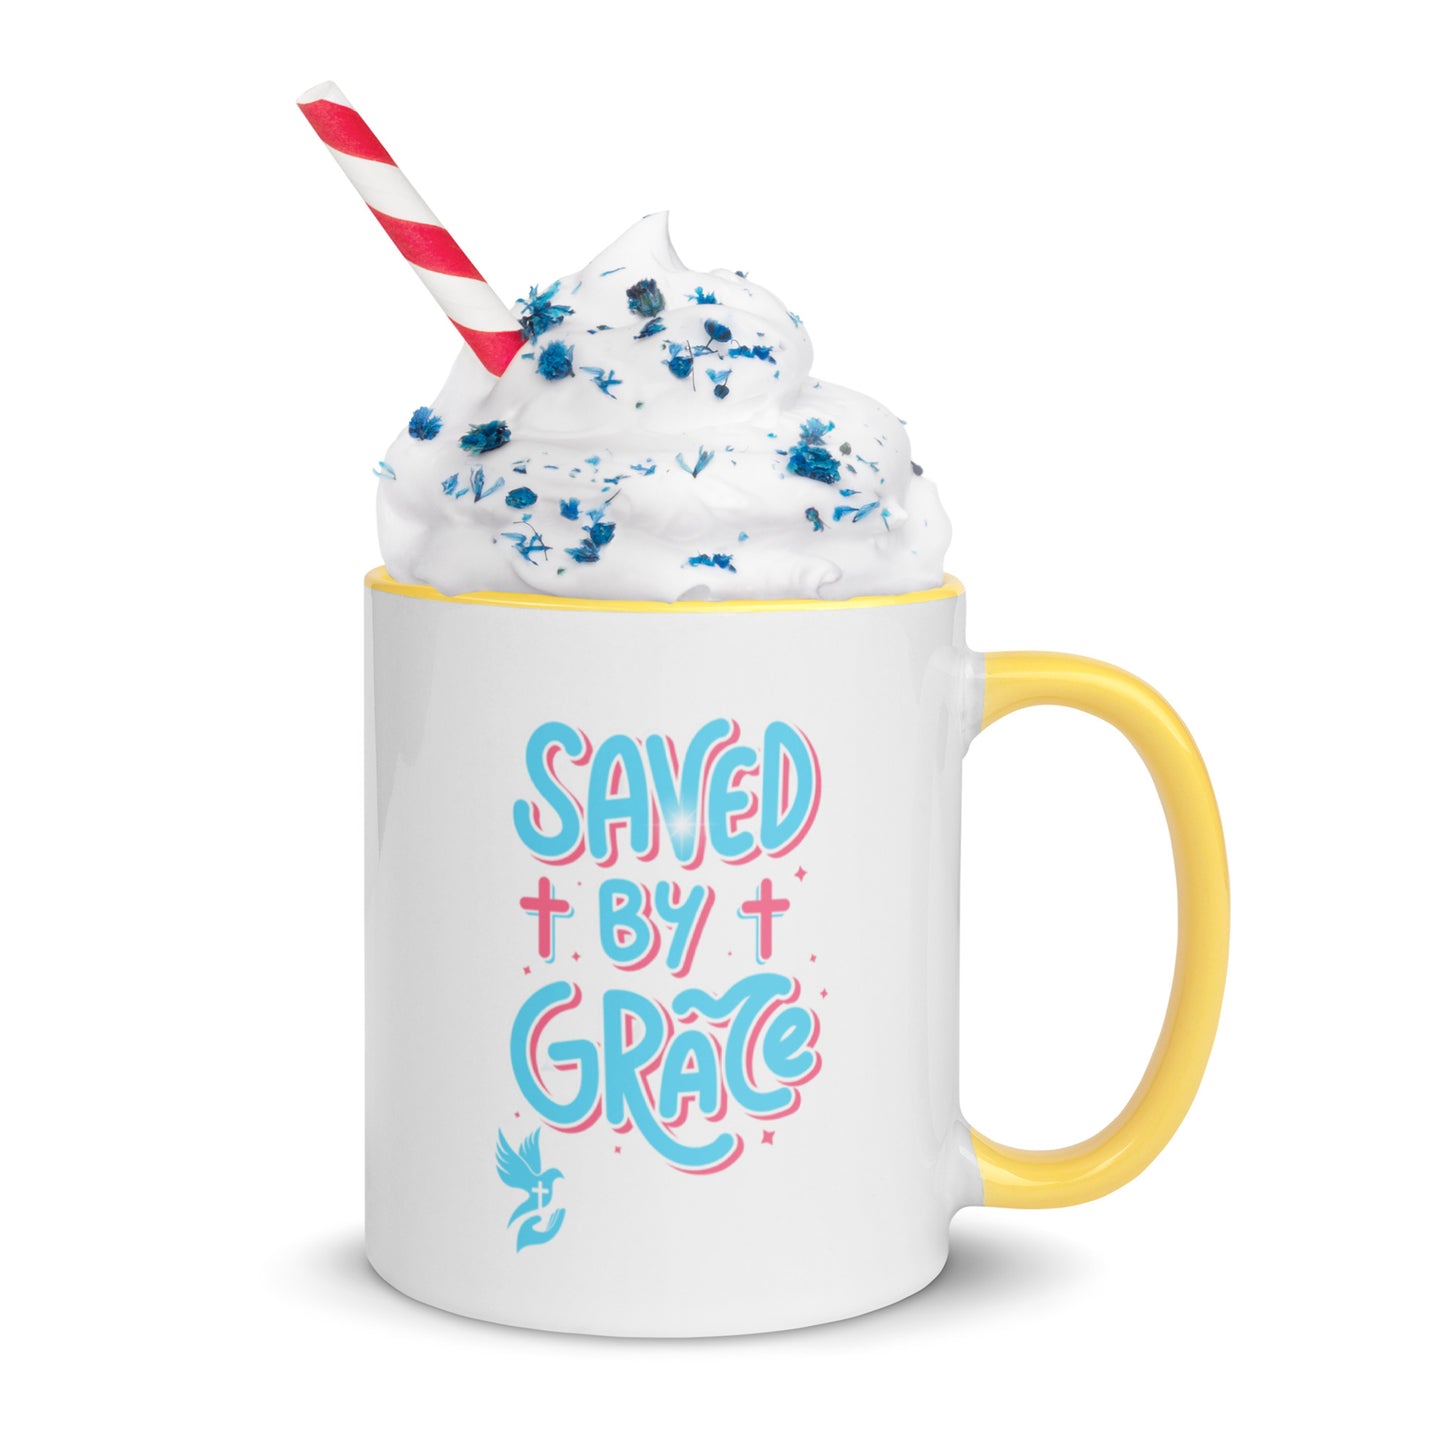 Saved By Grace Mug with Color Inside, Faith-based Mugs, Religious Mugs, Christian Mugs, Mugs with Words, Mugs, Colorful Mugs, Ceramic ware